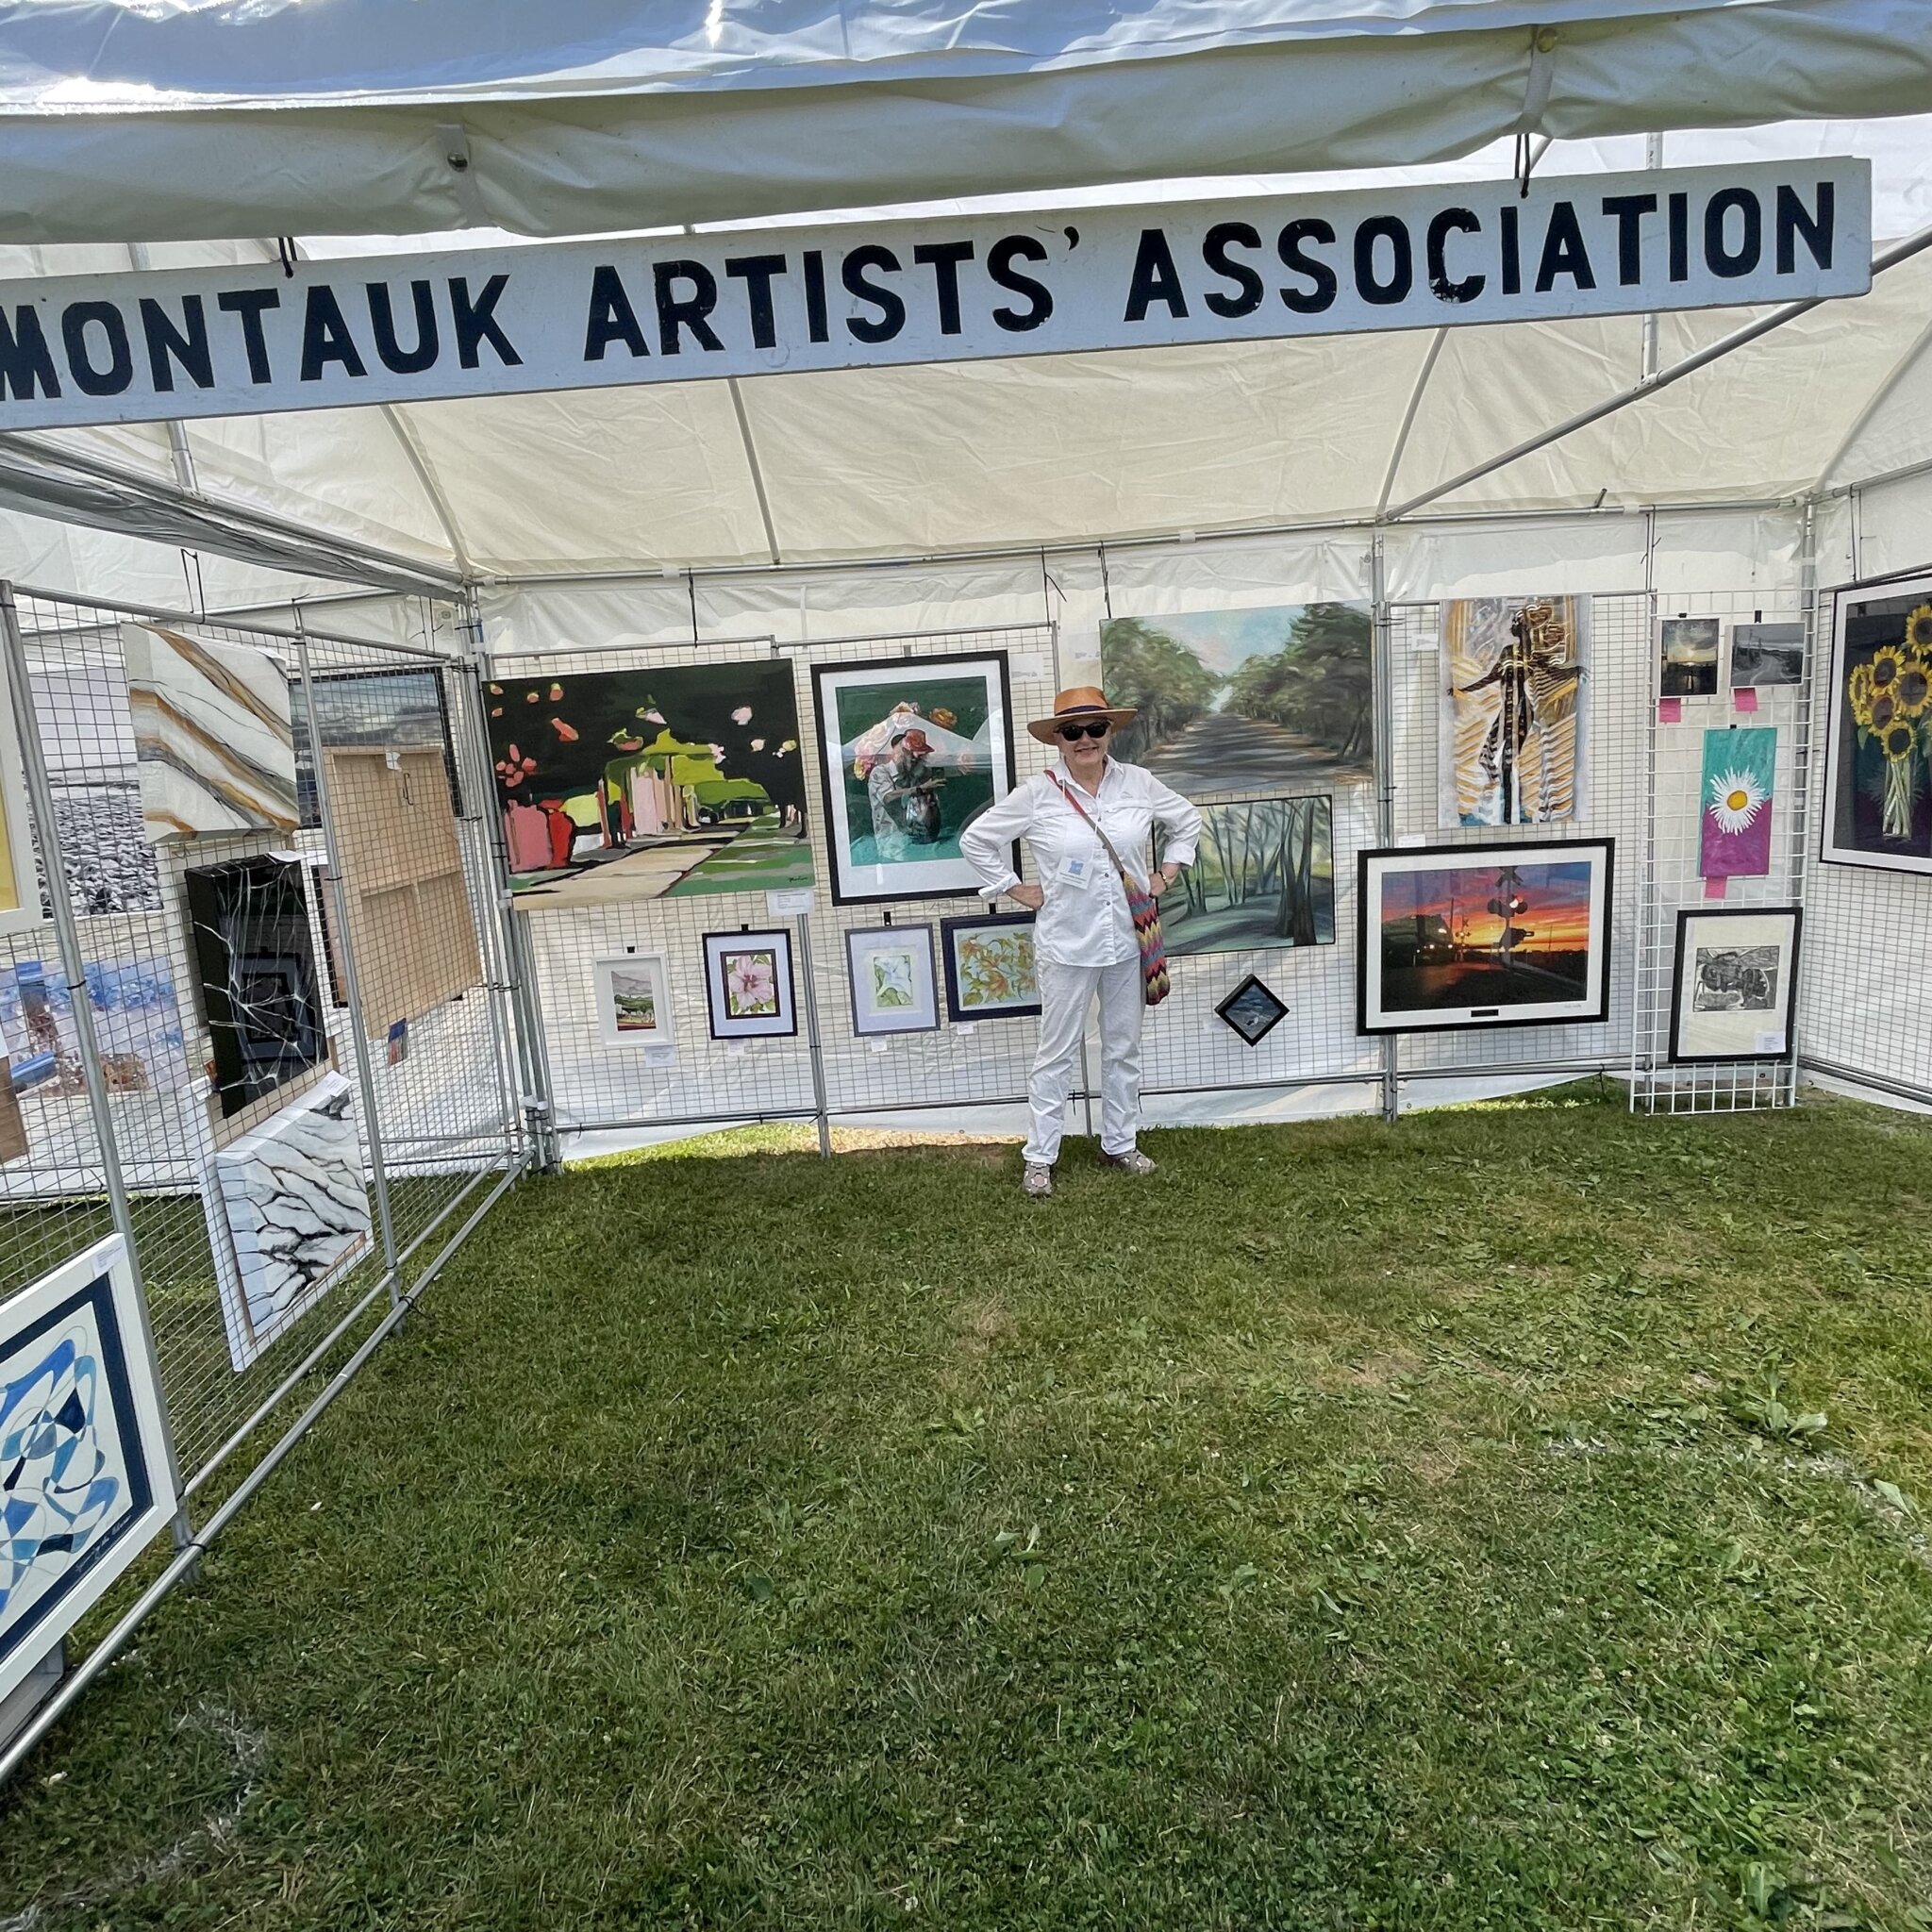 Montauk Artists Association on the Green